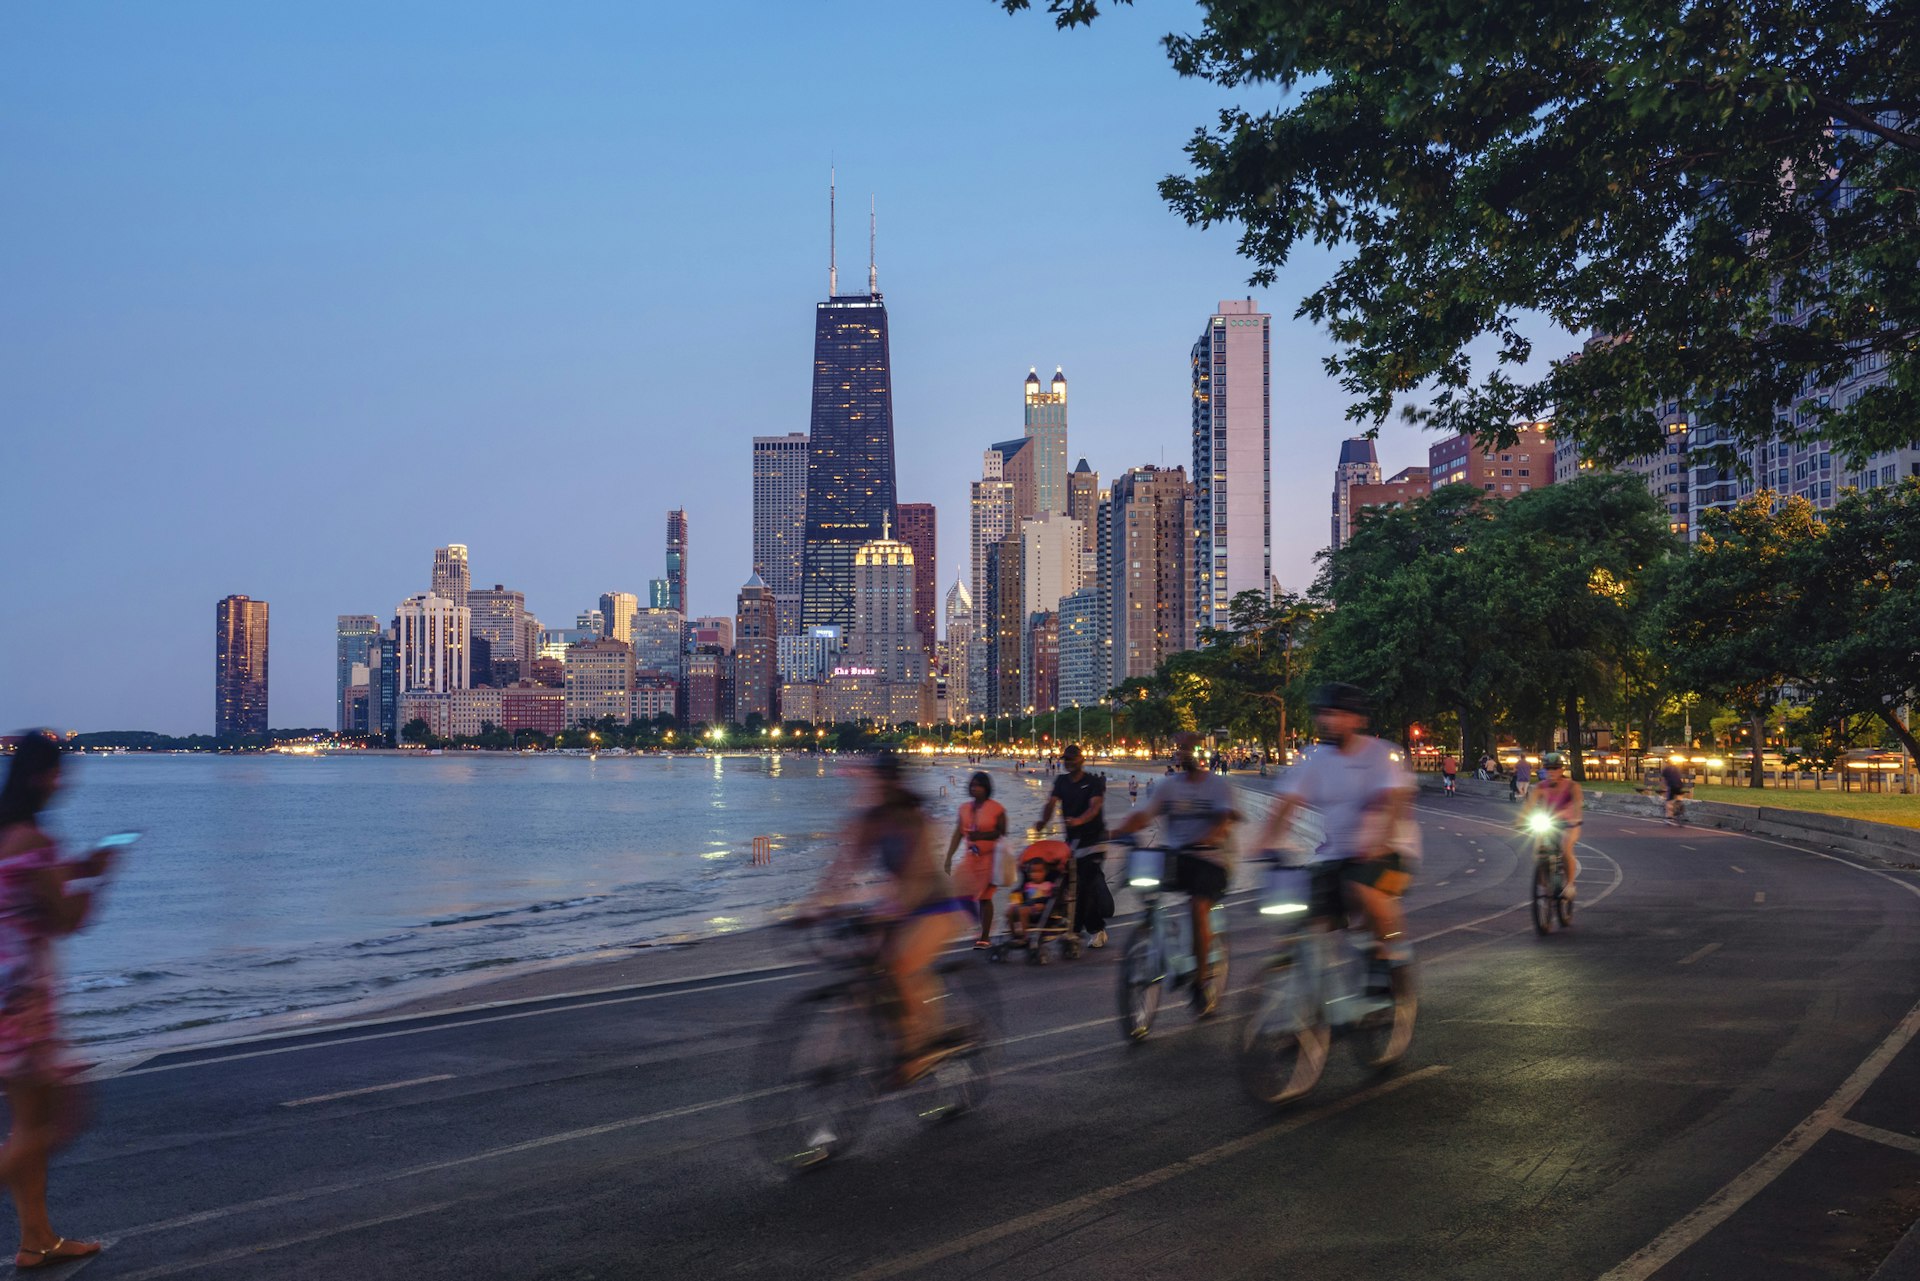 People riding bicycles at night along Lake Michigan, Chicago, Illinois, USA